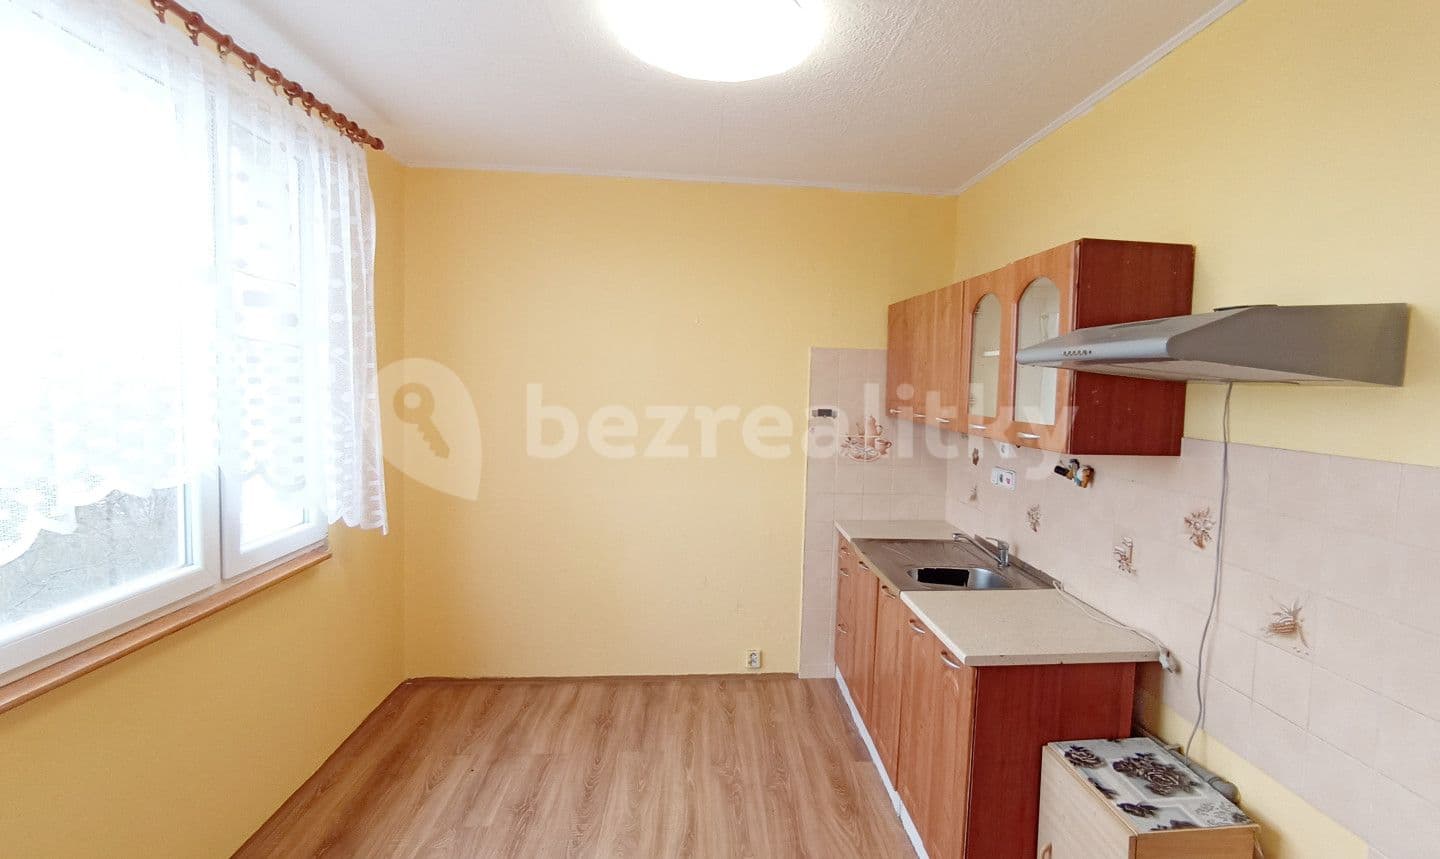 1 bedroom flat for sale, 35 m², Karla Čapka, Krupka, Ústecký Region